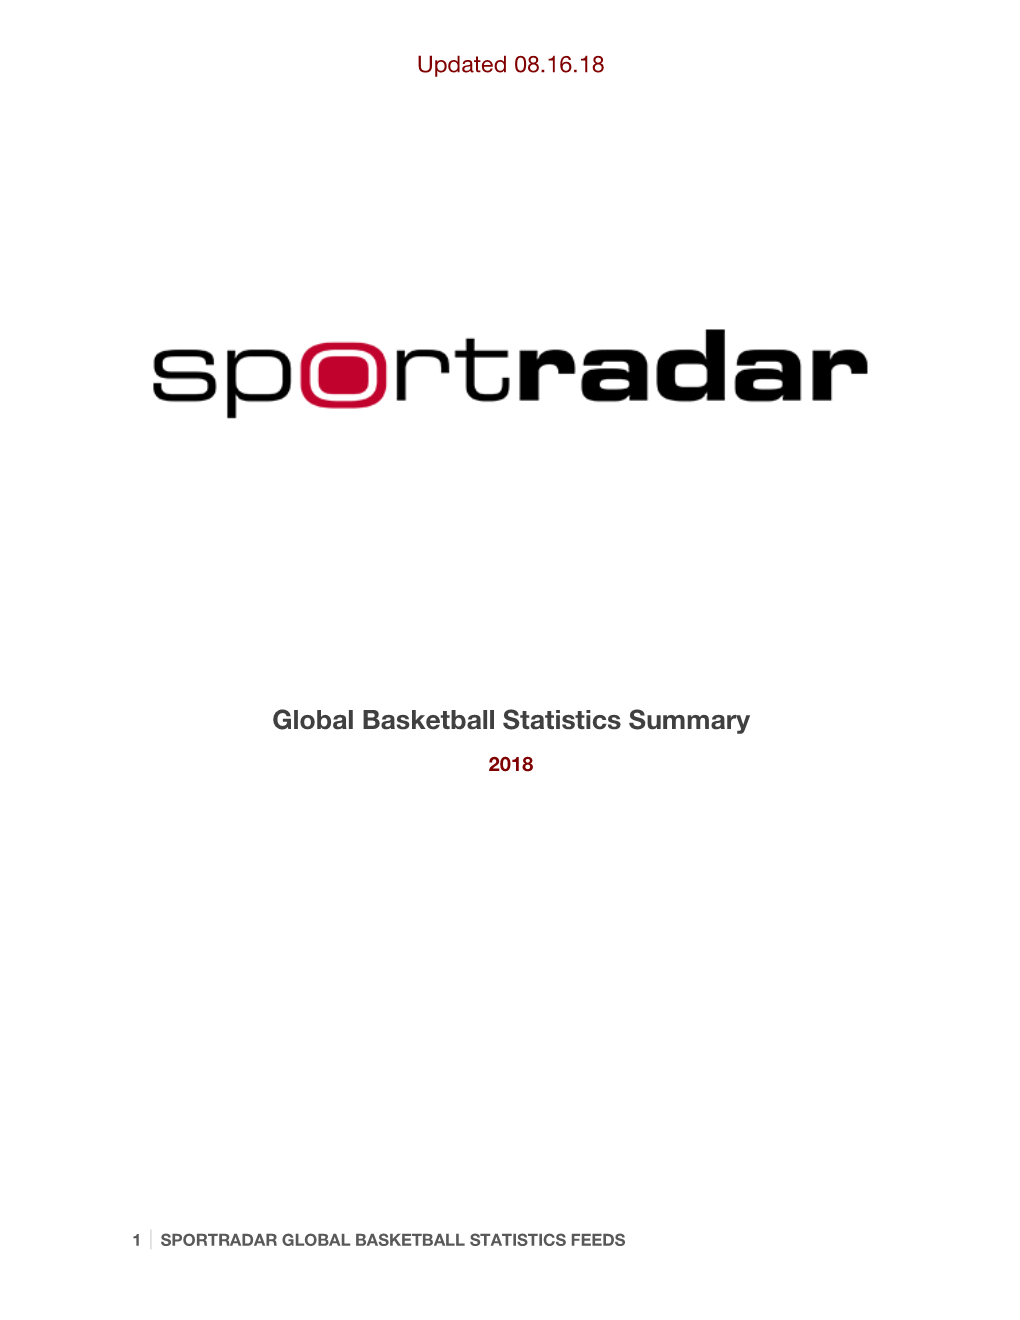 Global Basketball Statistics Summary